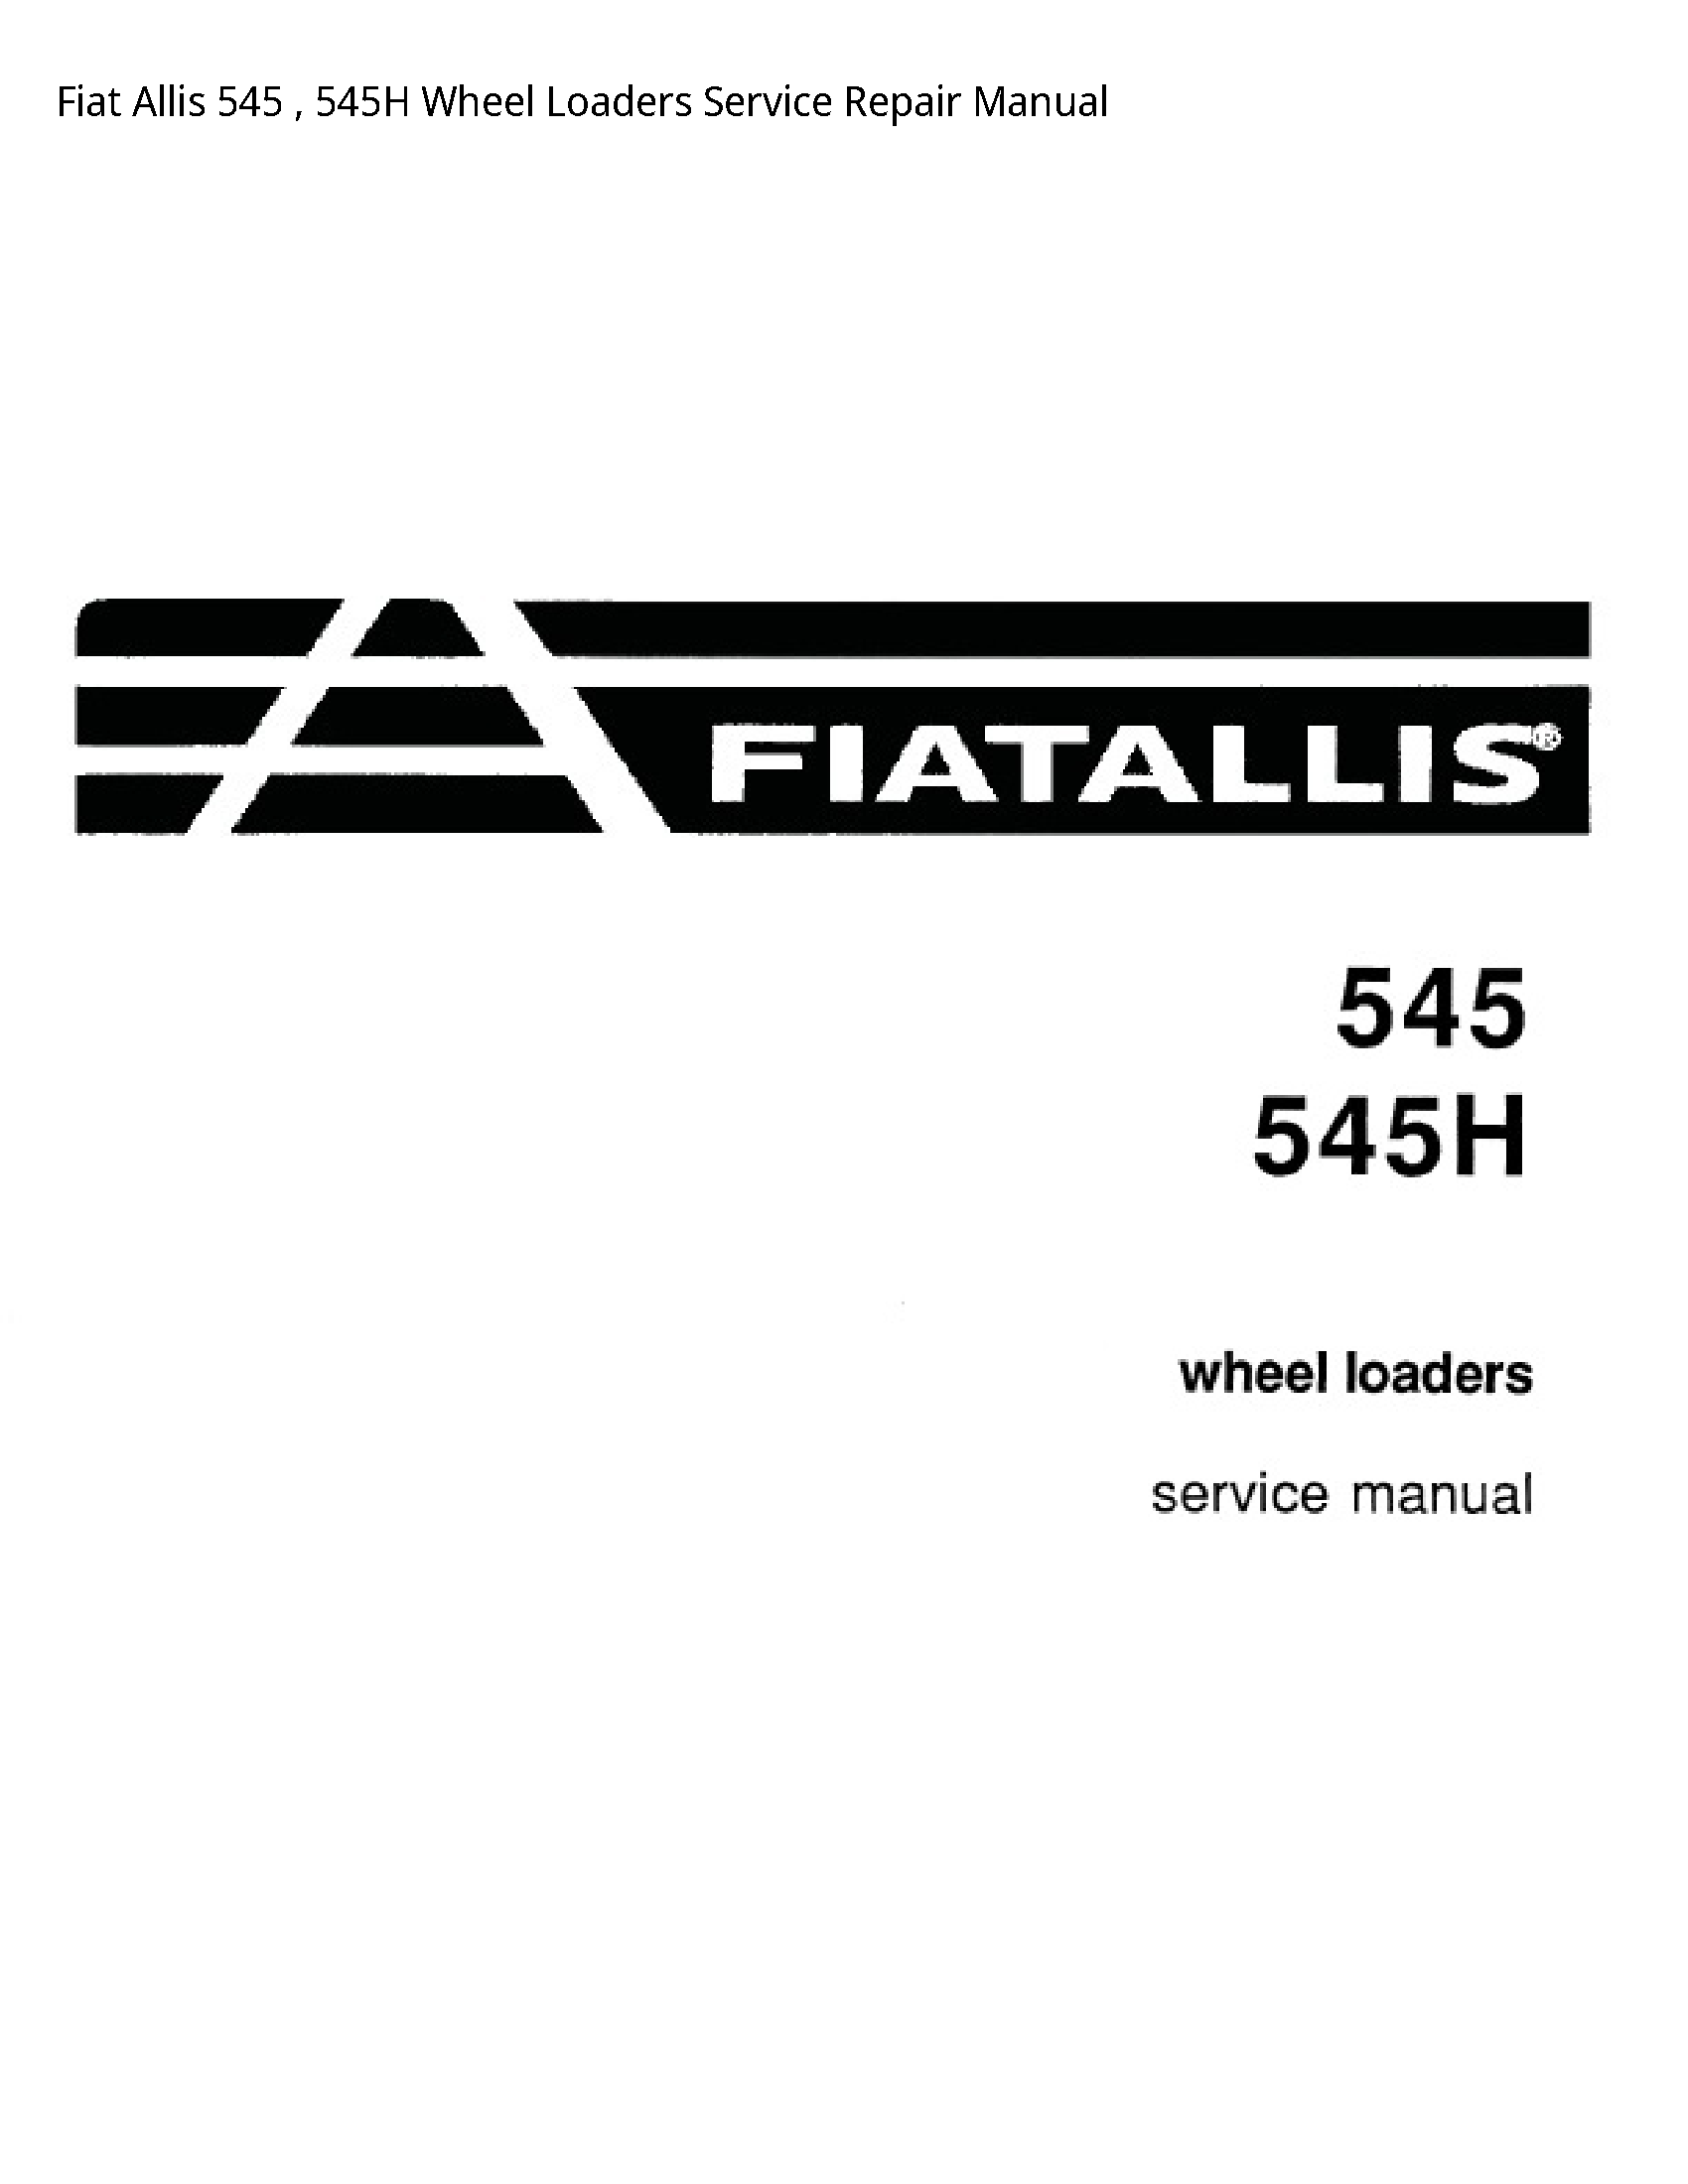 Fiat Allis 545 Wheel Loaders manual